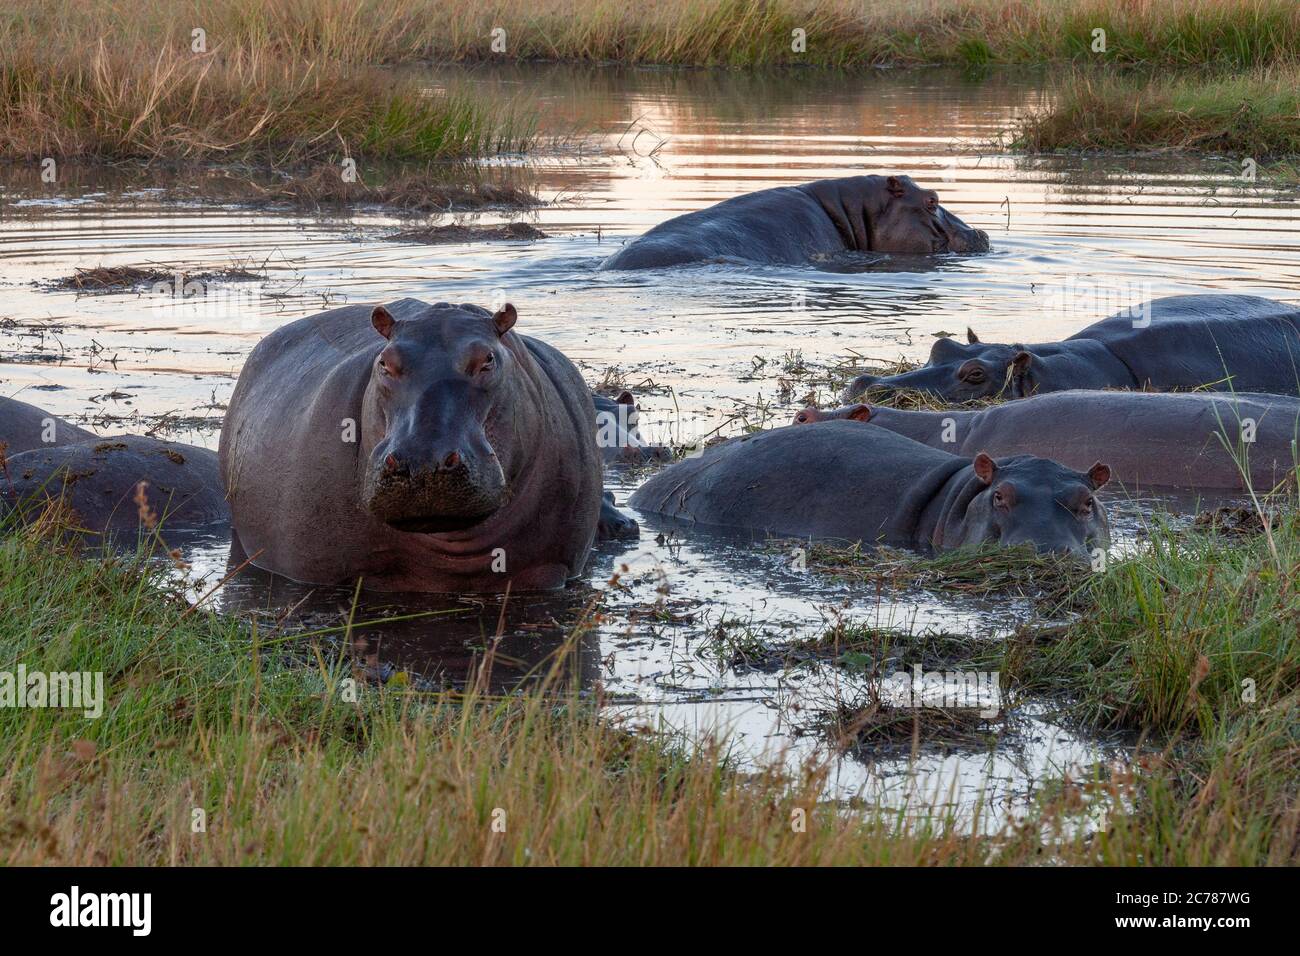 Pod von Hippopotamus (Hippopotamus amphibius) bei Sonnenaufgang im Khawi River im Norden Botswanas, Afrika. Stockfoto